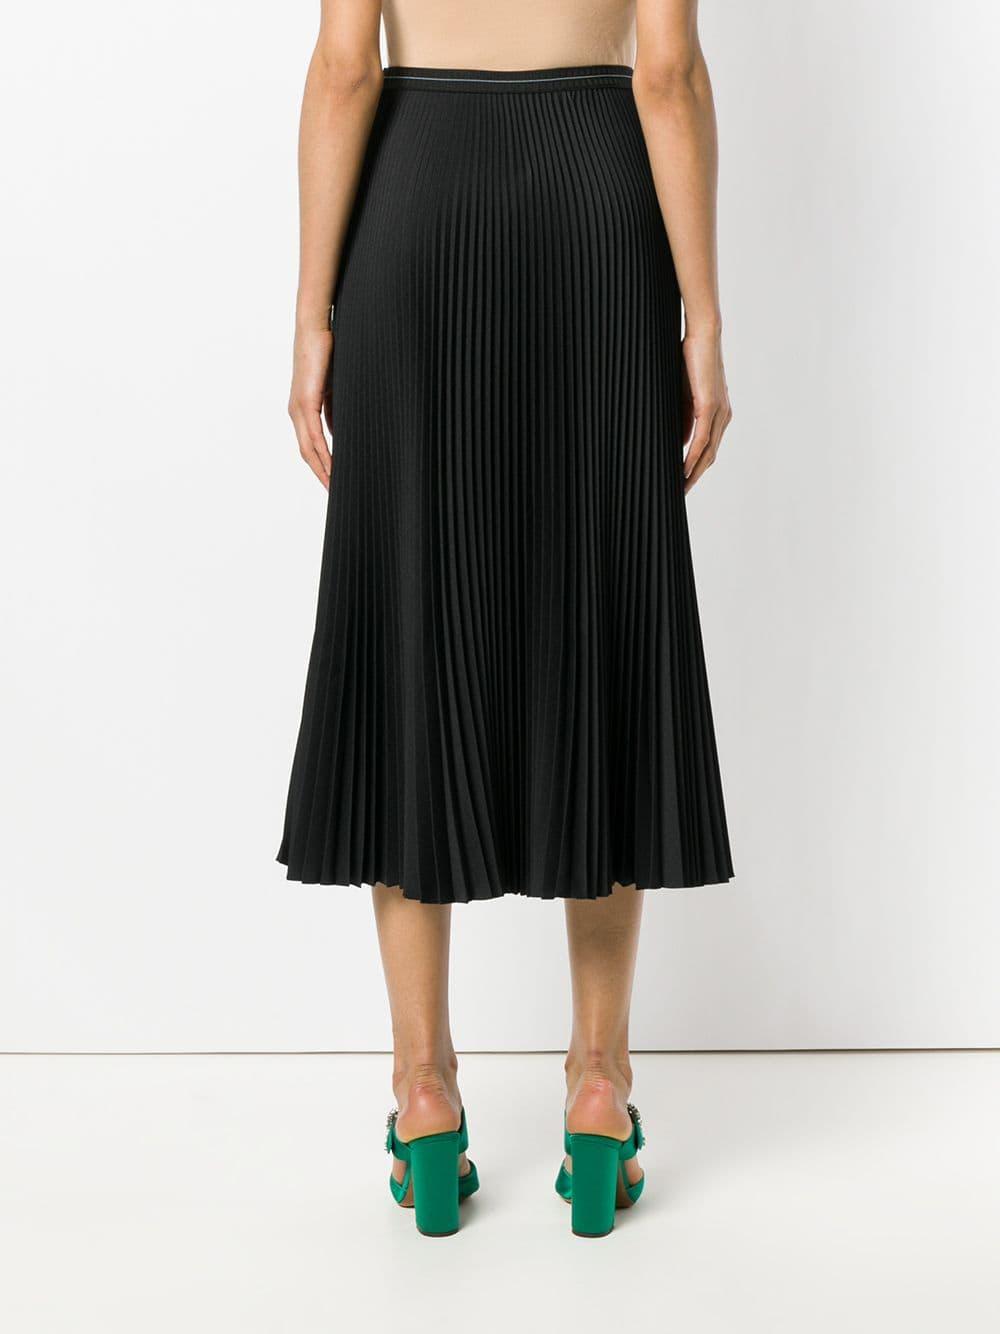 Prada Pleated Midi Skirt in Black | Lyst